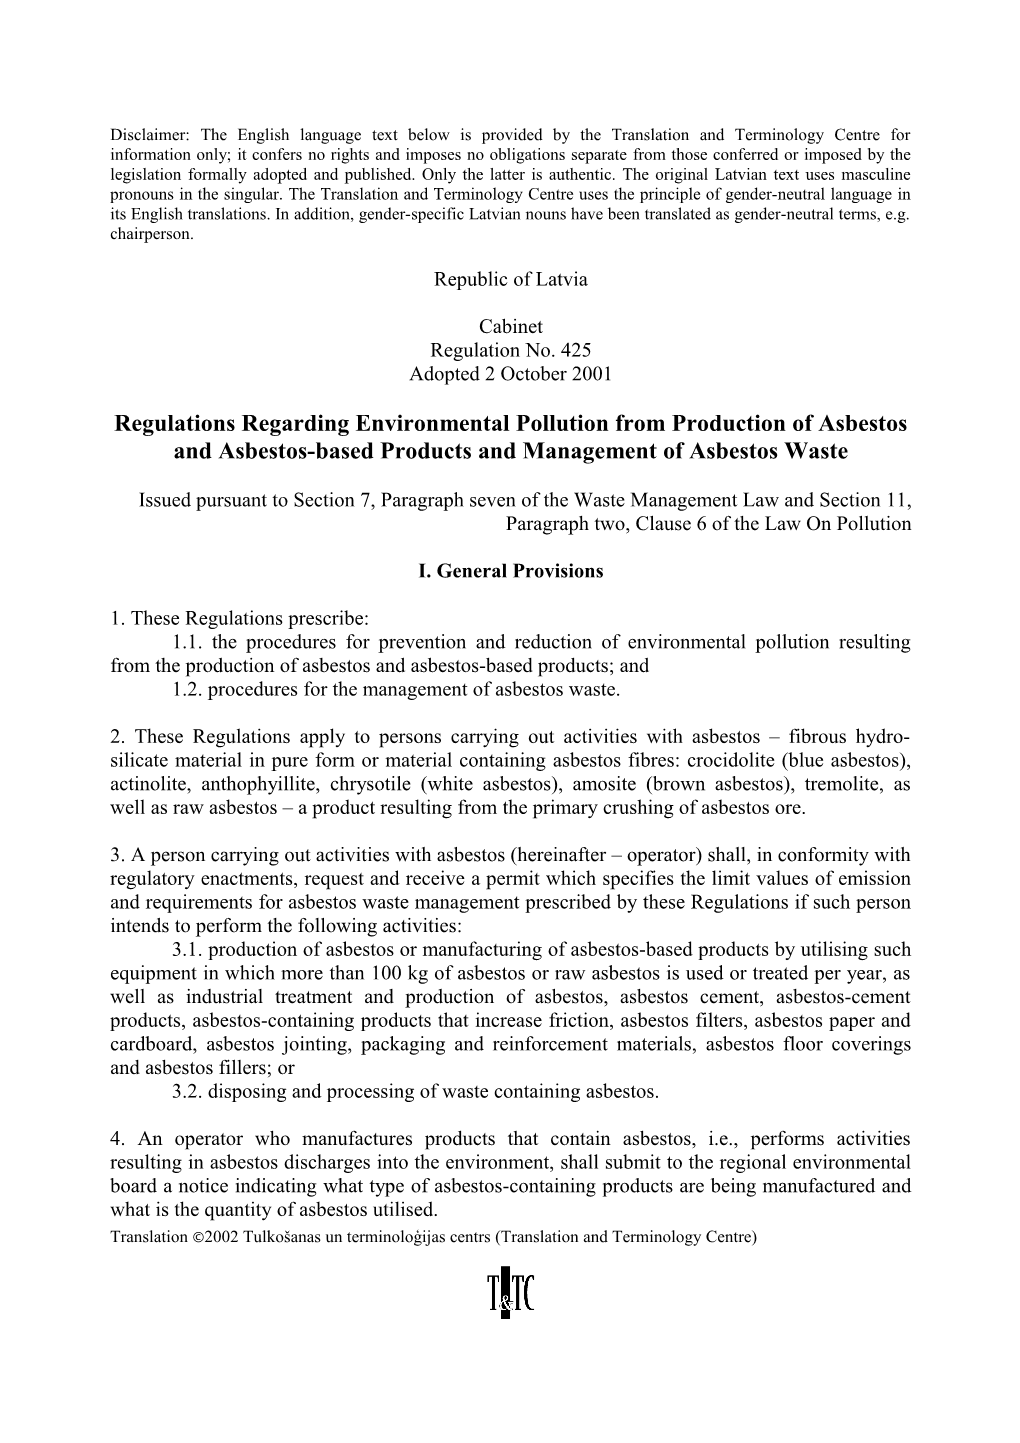 Regulations Regarding Environmental Pollution from Production of Asbestos and Asbestos-Based